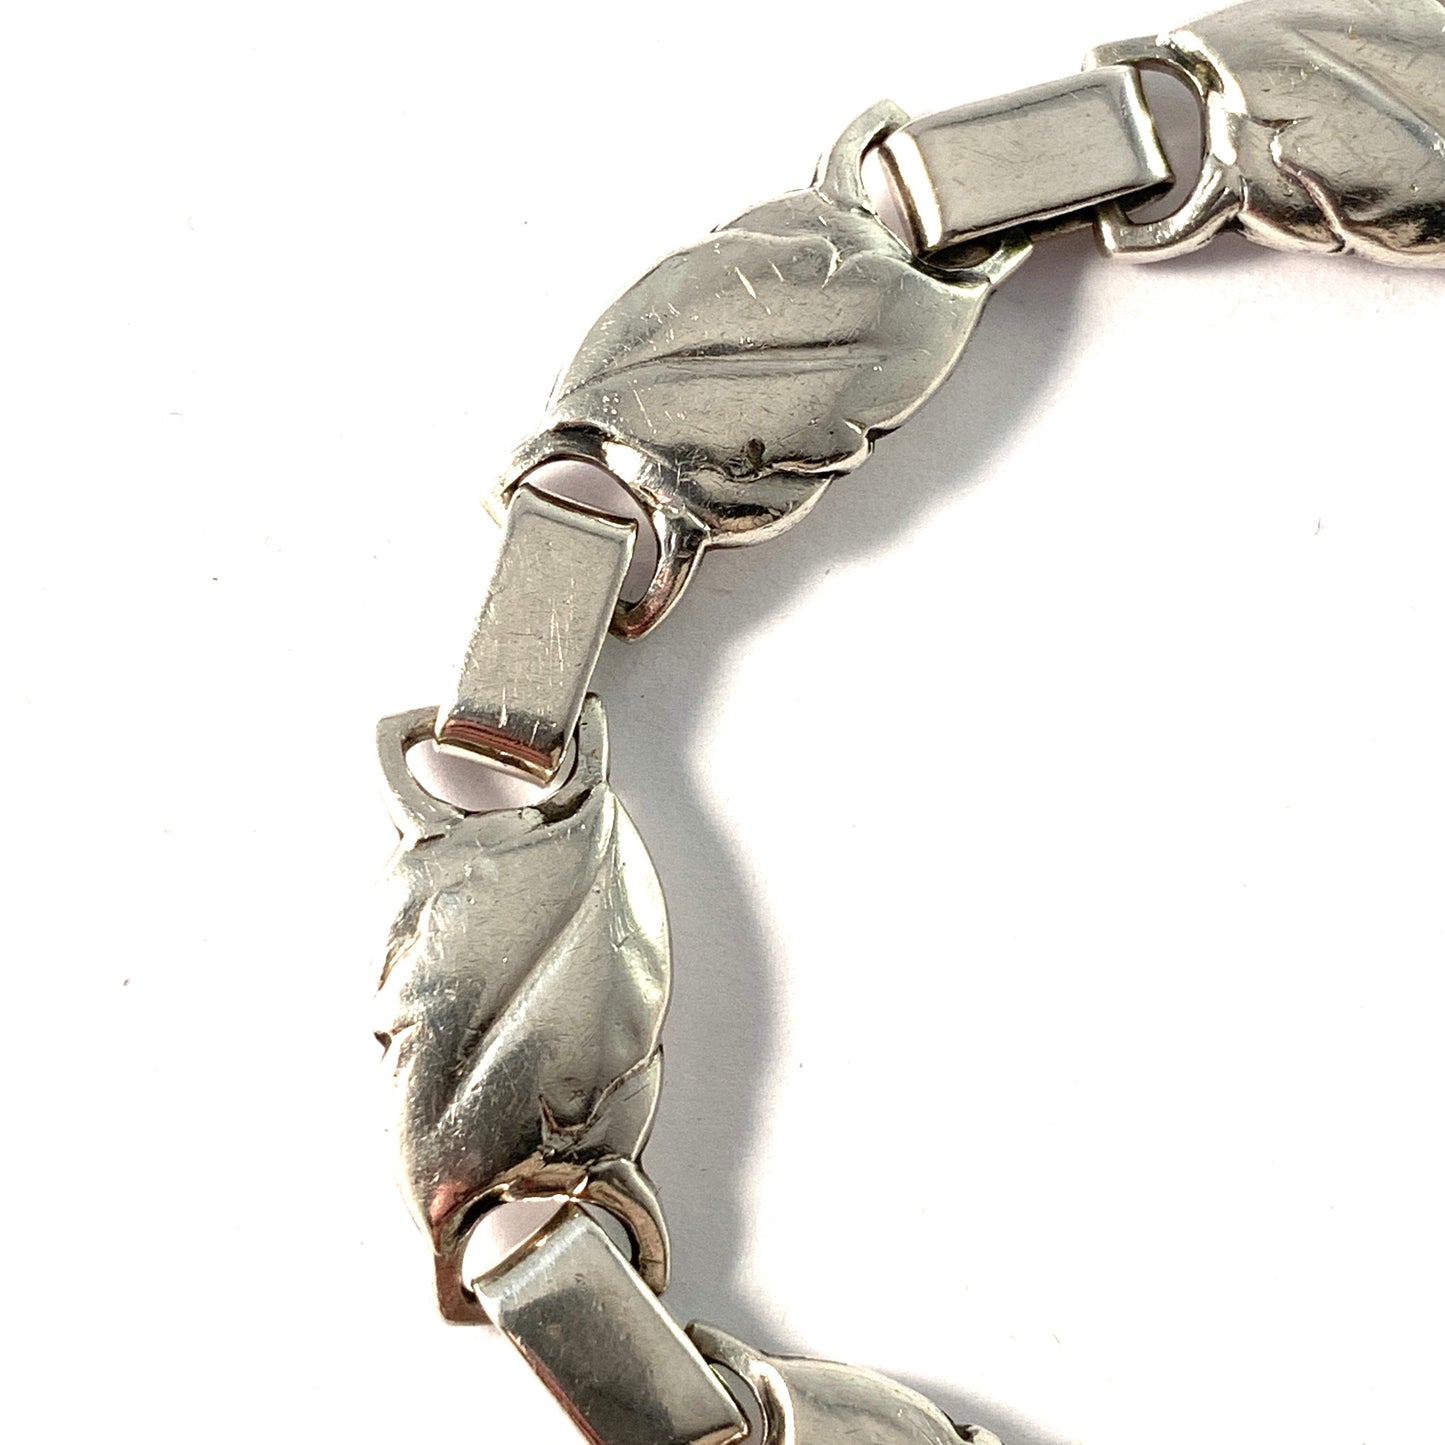 Eiler & Marløe, Denmark 1940s Solid Silver Link Bracelet.